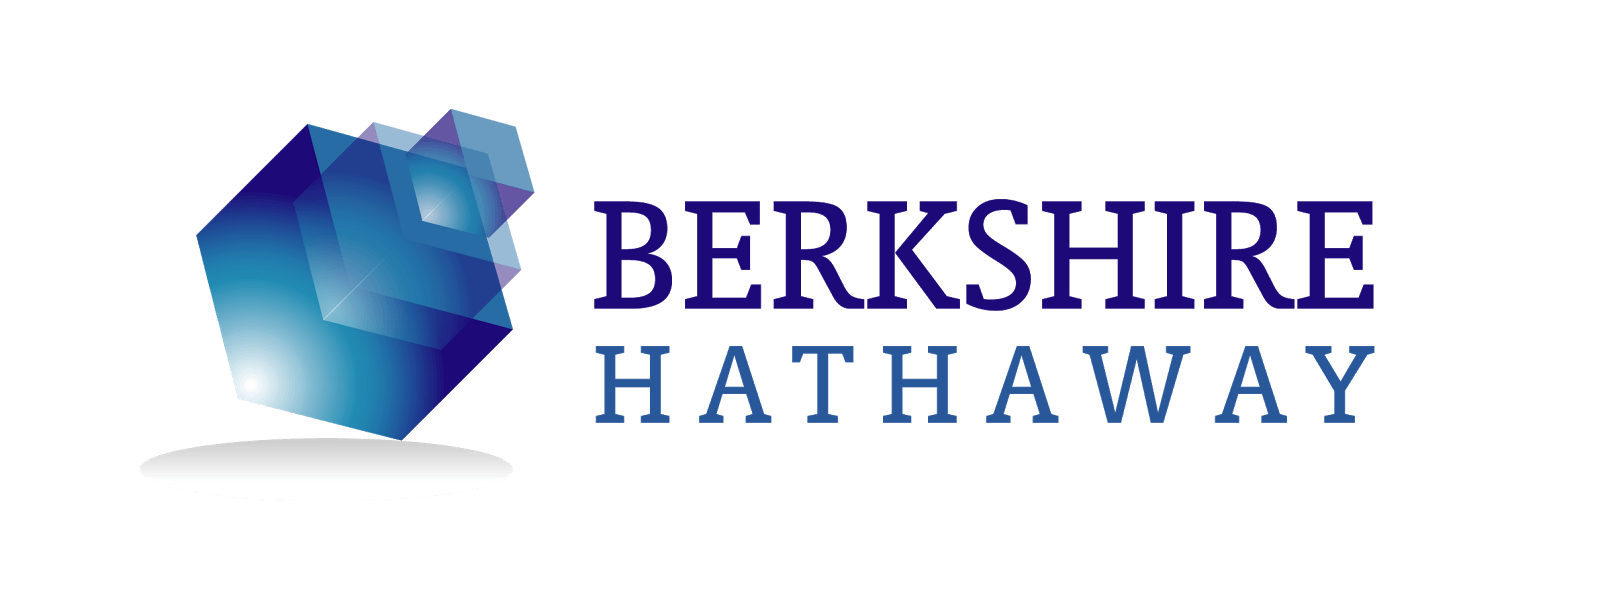 Berkshire Logo - Berkshire Hathaway Logo and Description - LOGO ENGINE